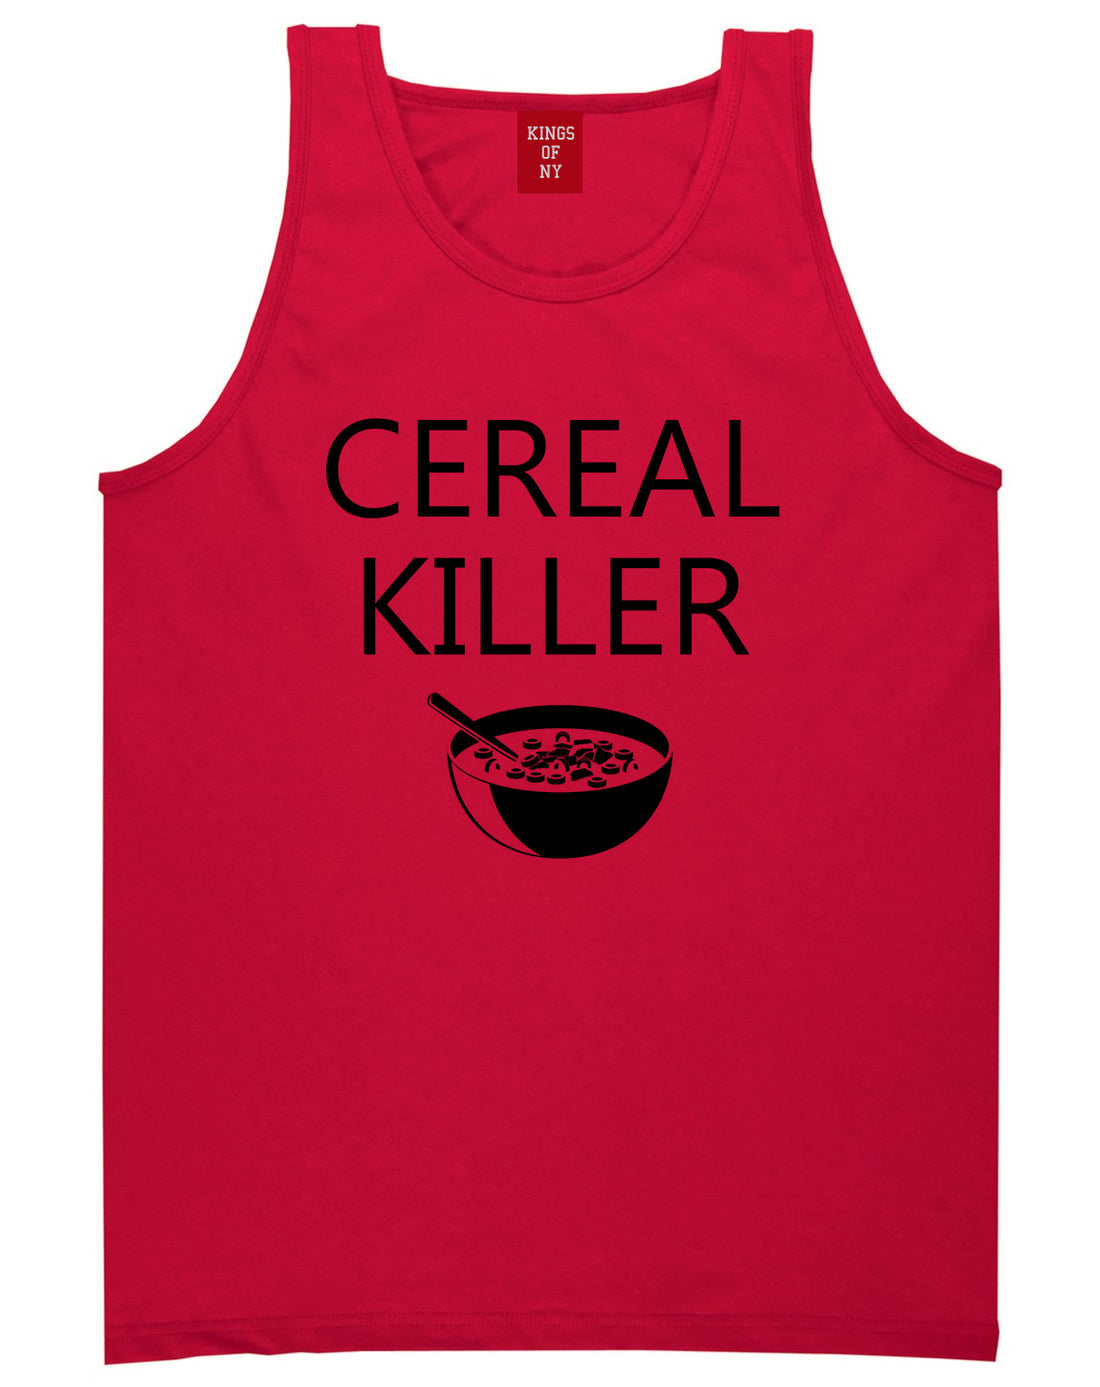 Cereal Killer Funny Halloween Mens Tank Top T-Shirt Red